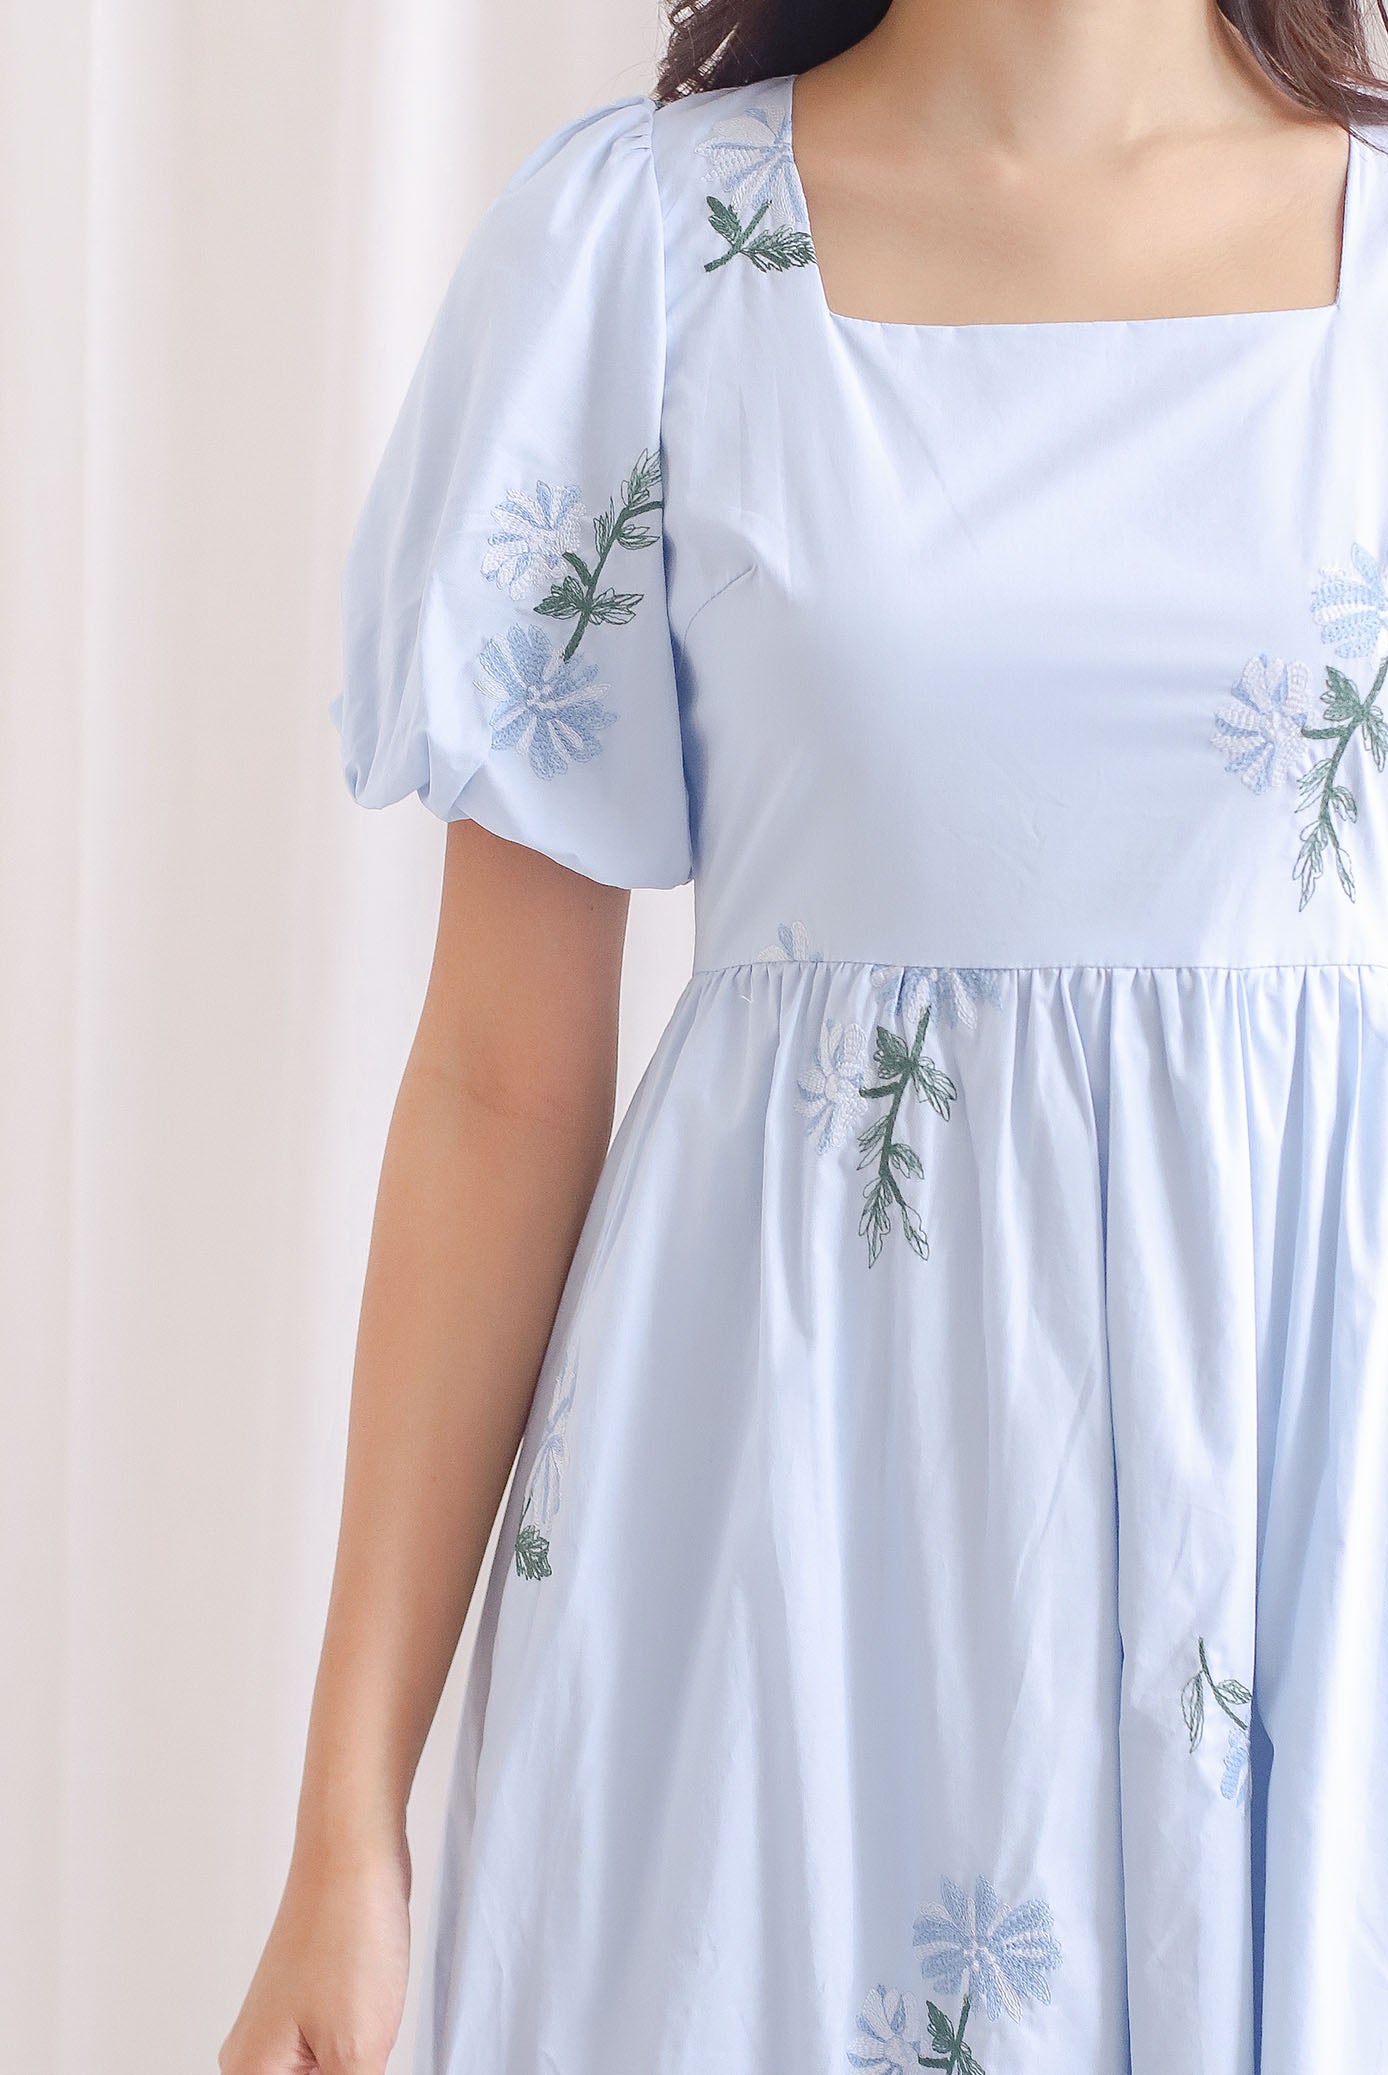 Kyara Embroidery Puffy Sleeve Maxi Dress In Skyblue